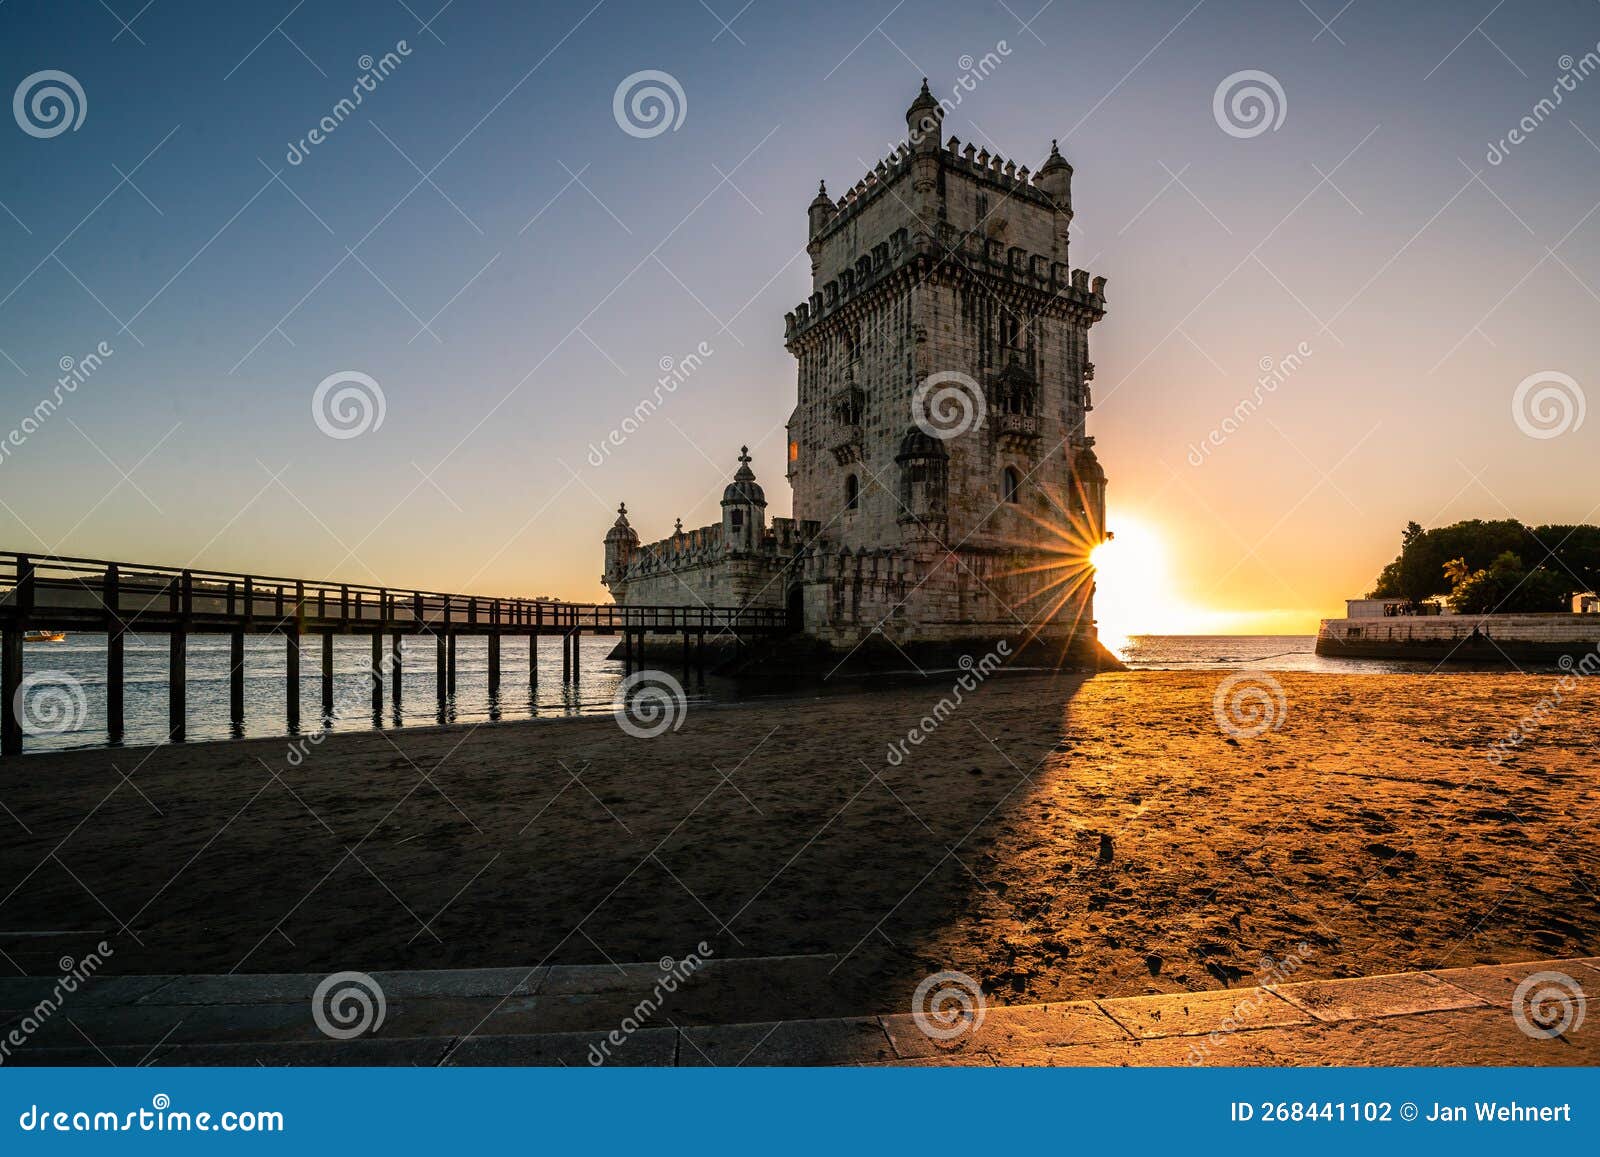 torre de belÃ©m, historical monument in the tagus river. sunset lisbon portugal